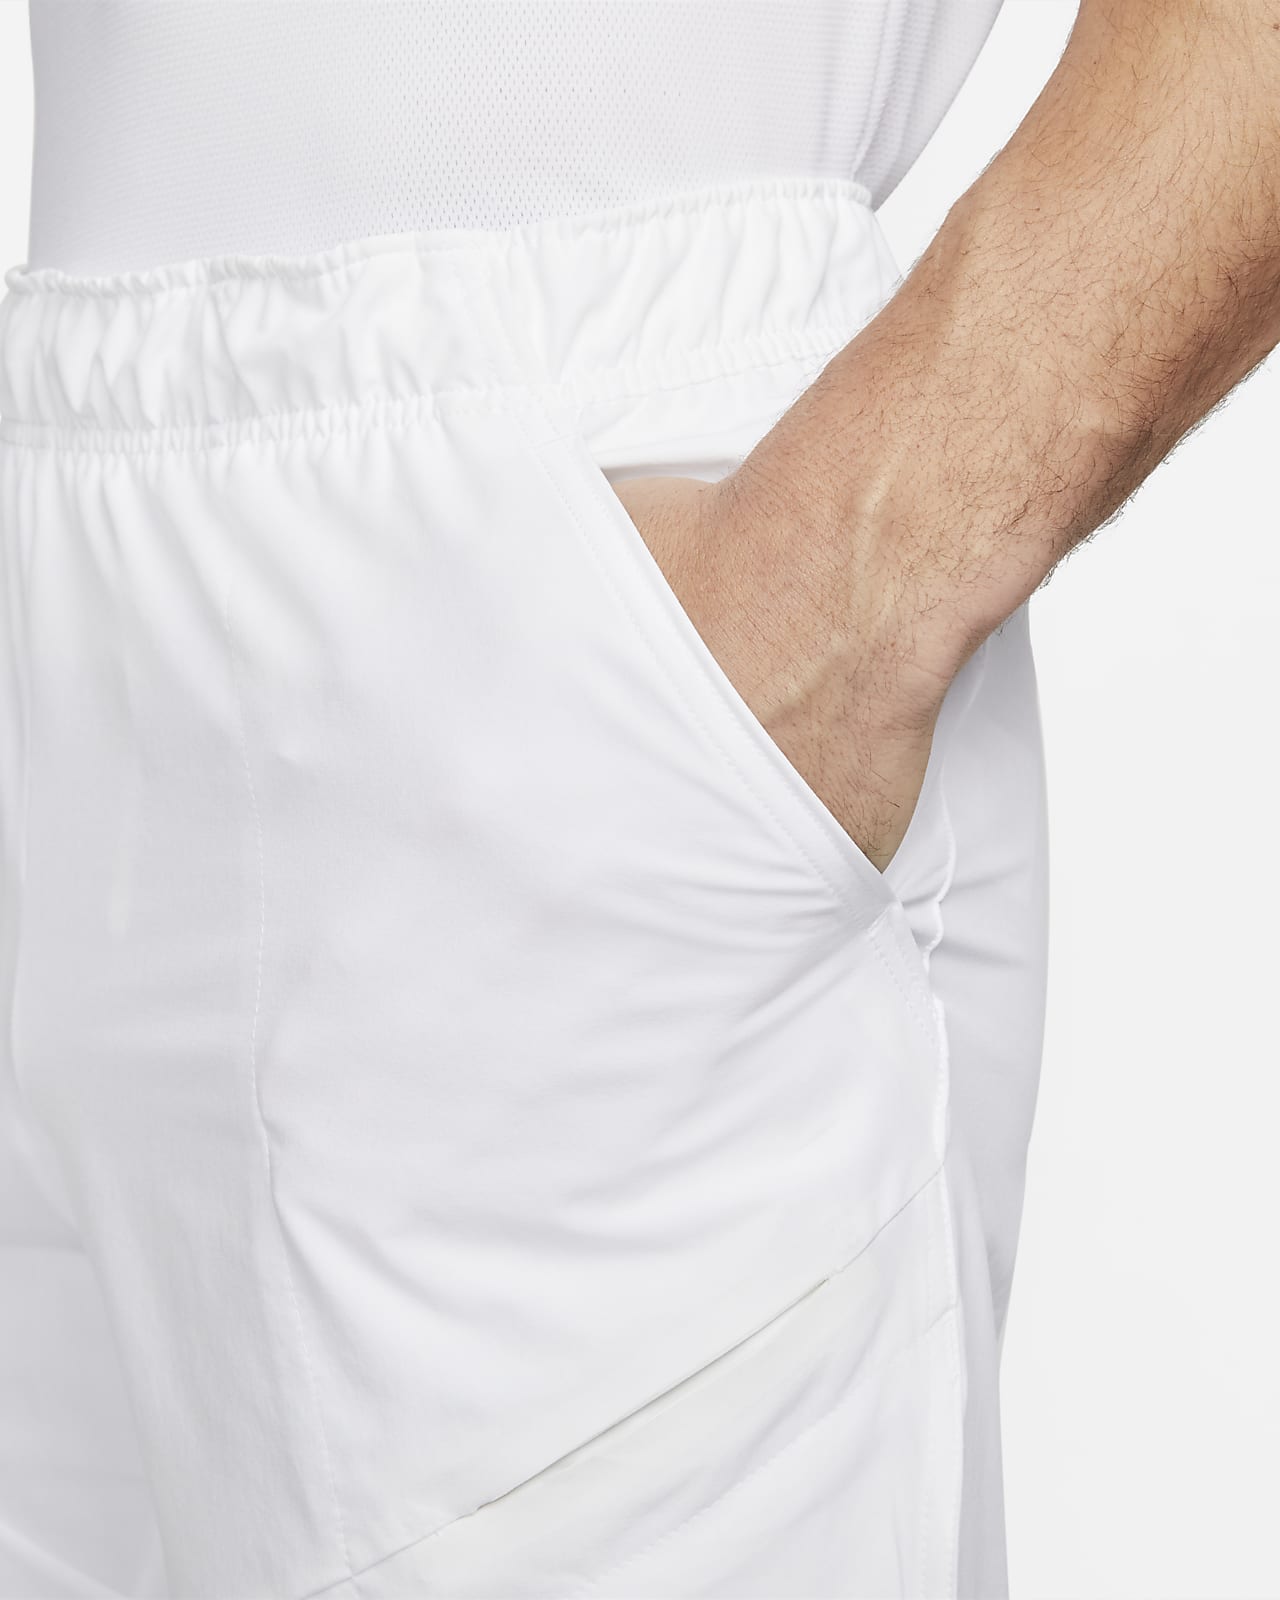 Nike Dri-FIT Advantage 7in Men's Tennis Shorts - Noble Red/White